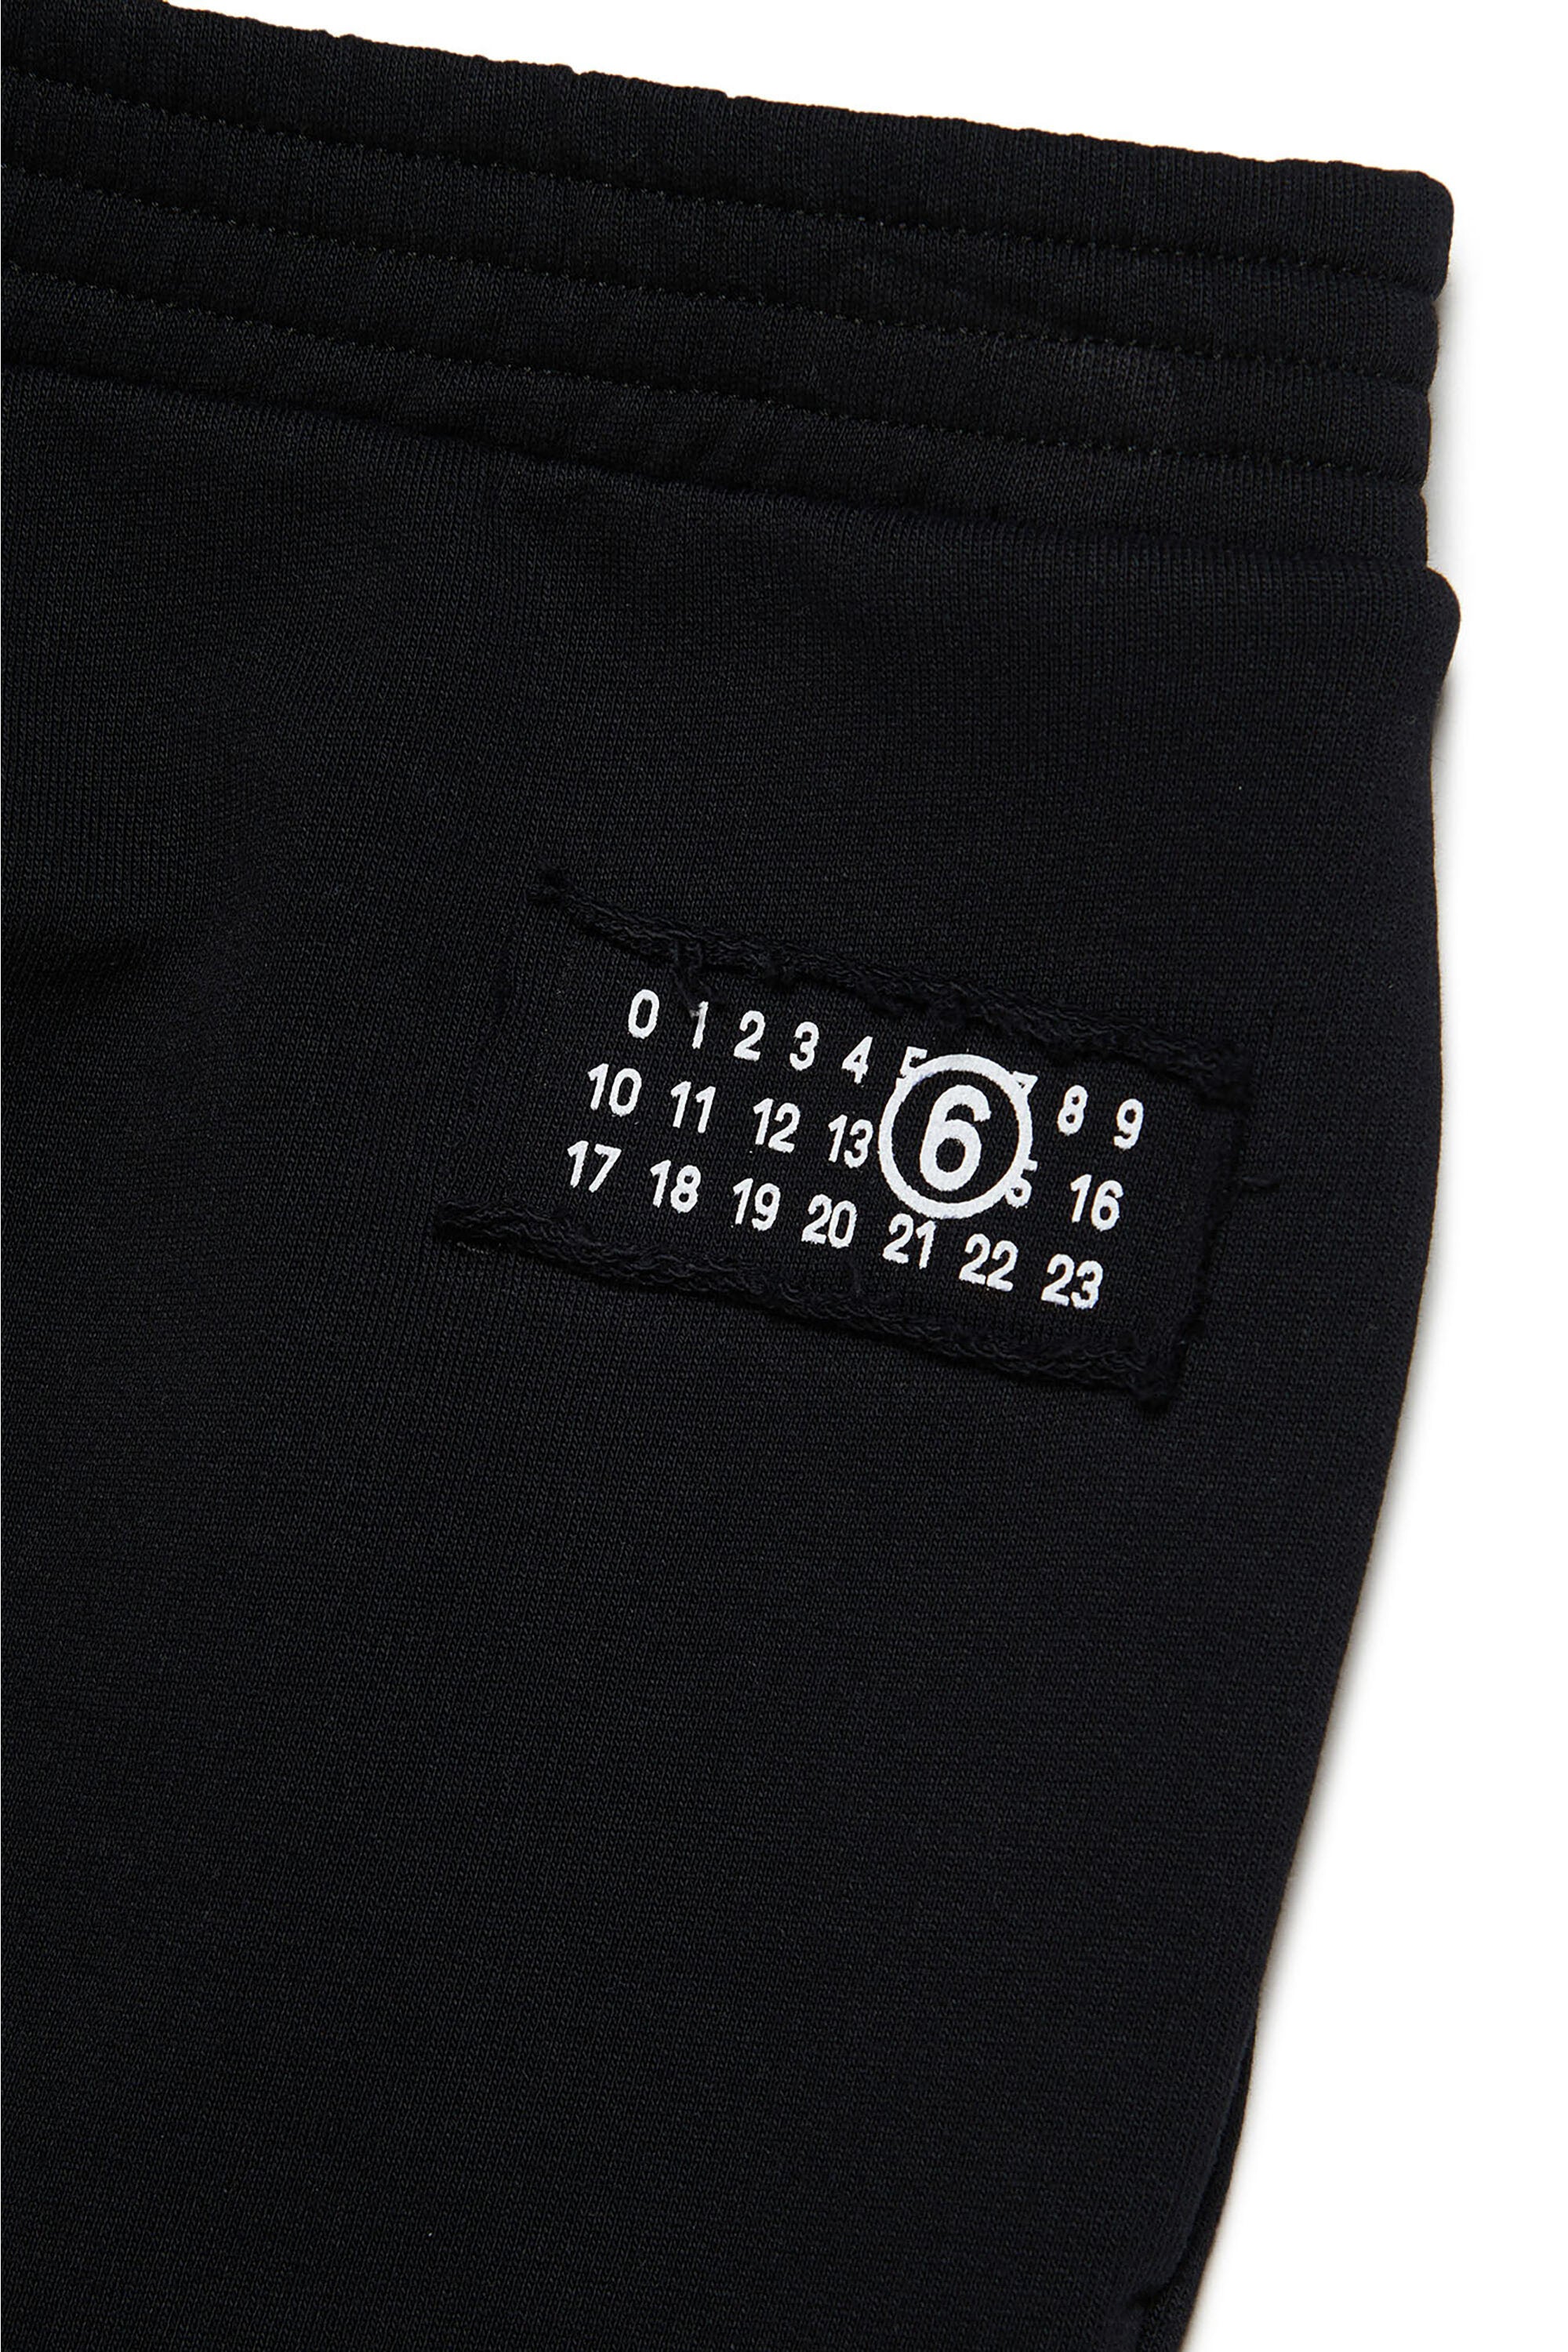 Pantalones en chándal con numeric logo